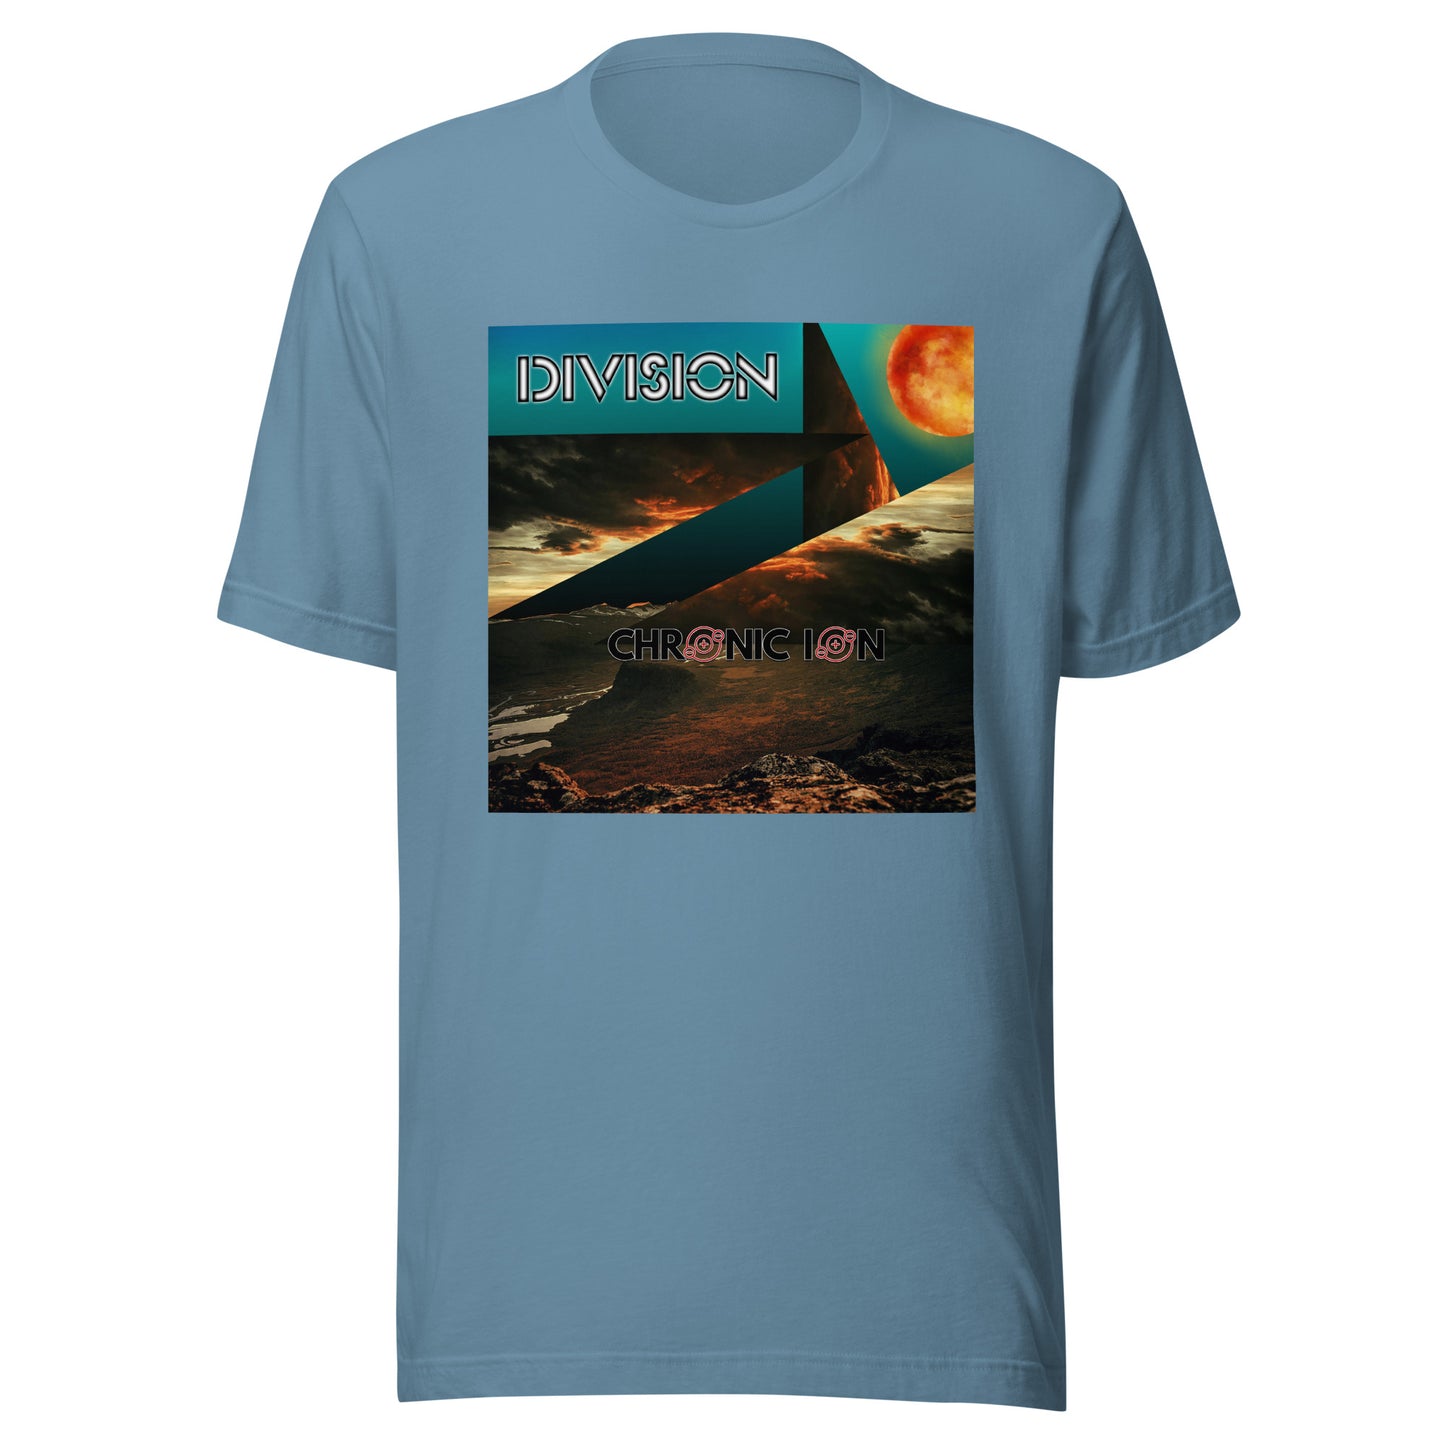 Chronic Ion - Division T-Shirt